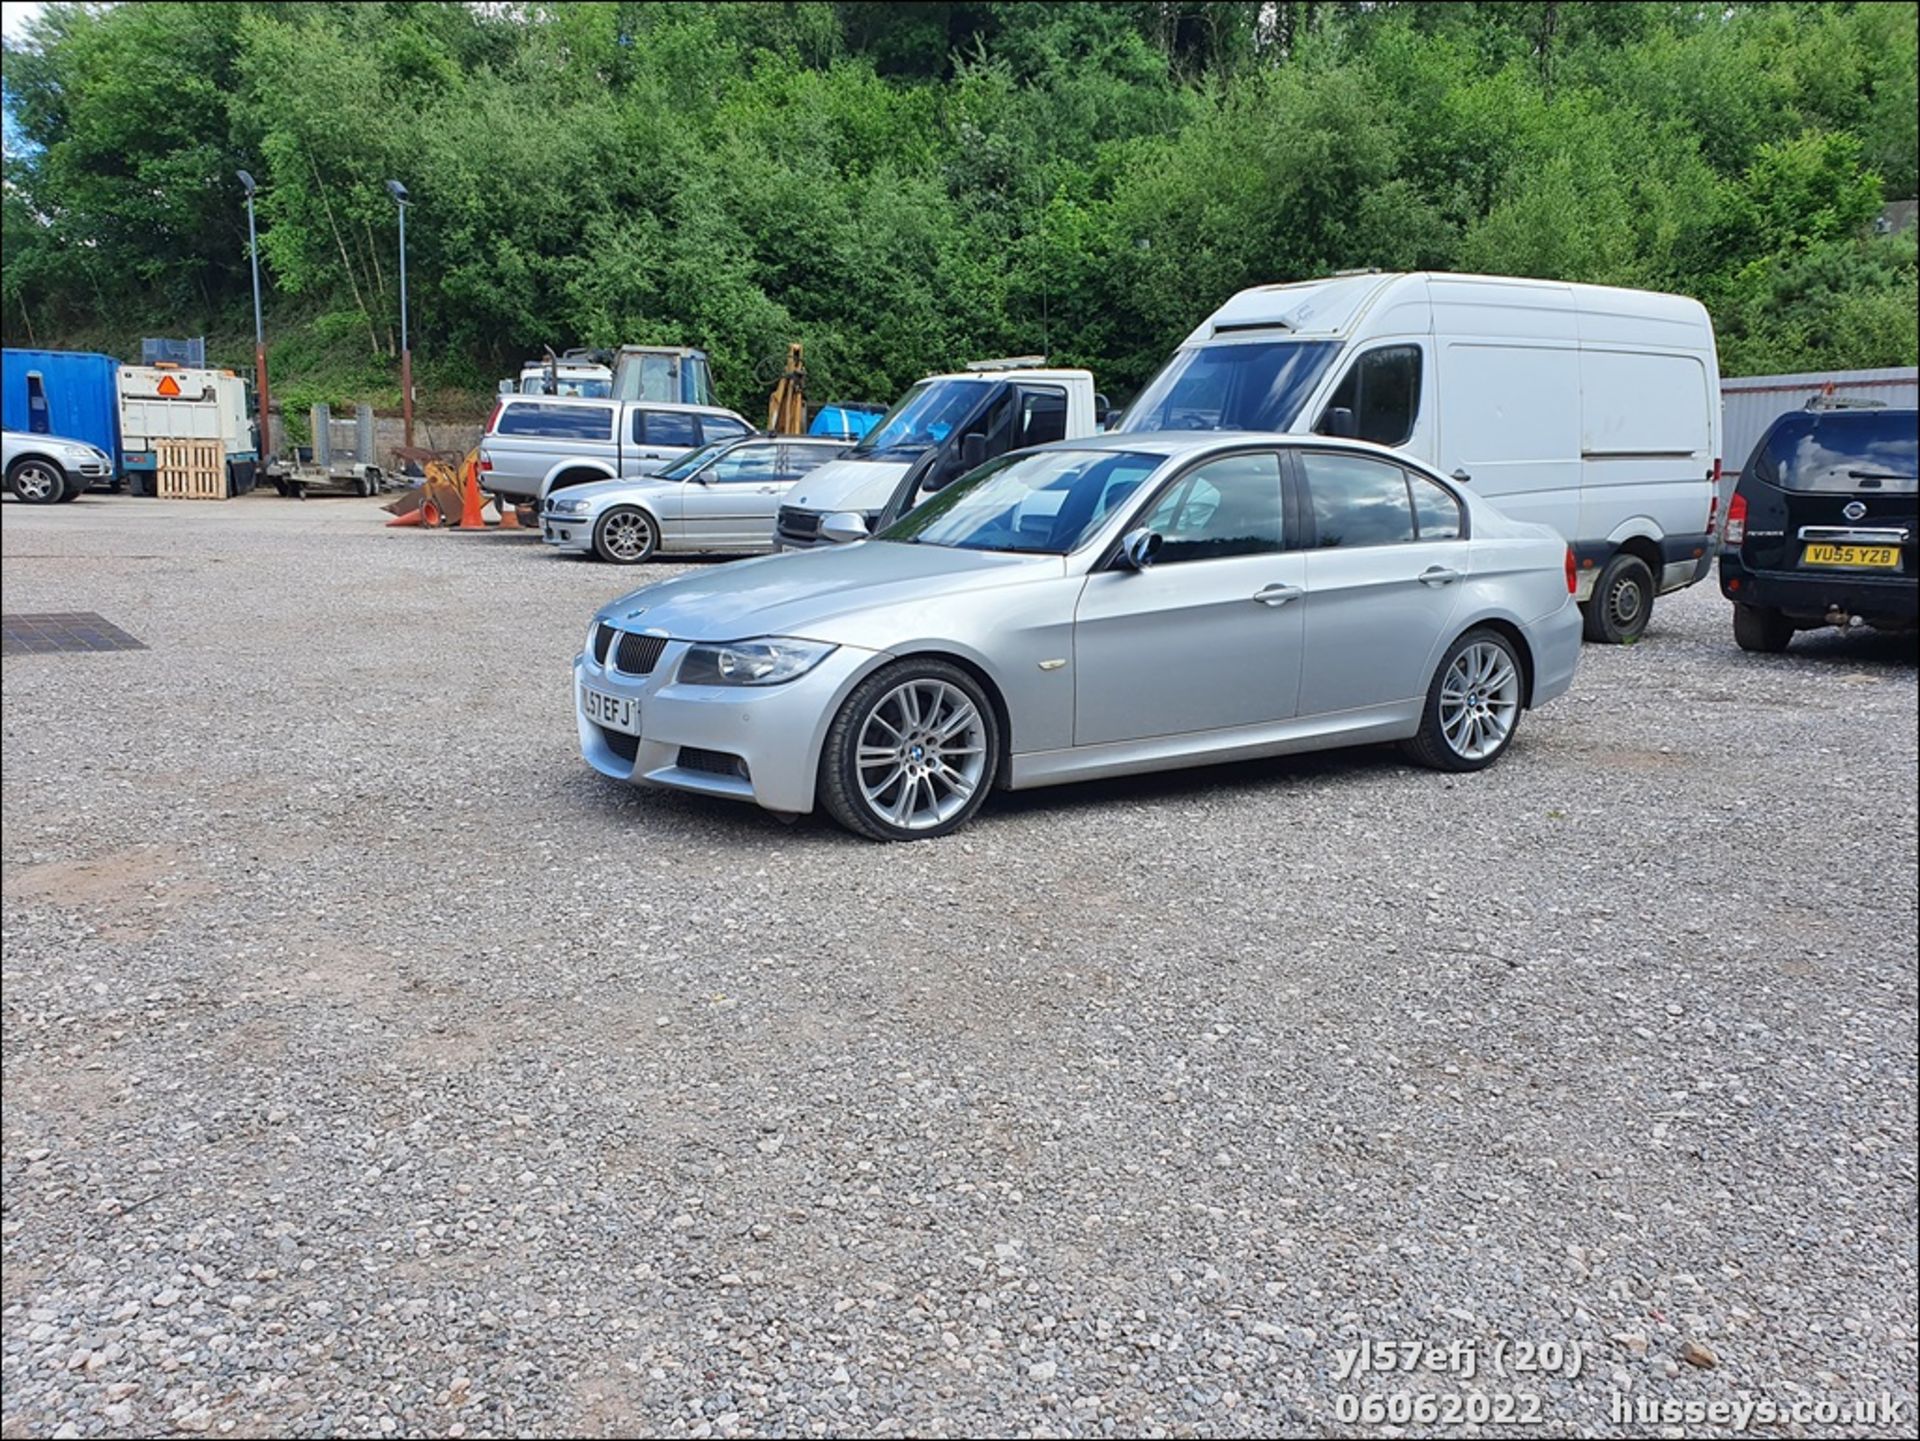 08/57 BMW 330D M SPORT AUTO - 2993cc 4dr Saloon (Silver) - Image 20 of 40